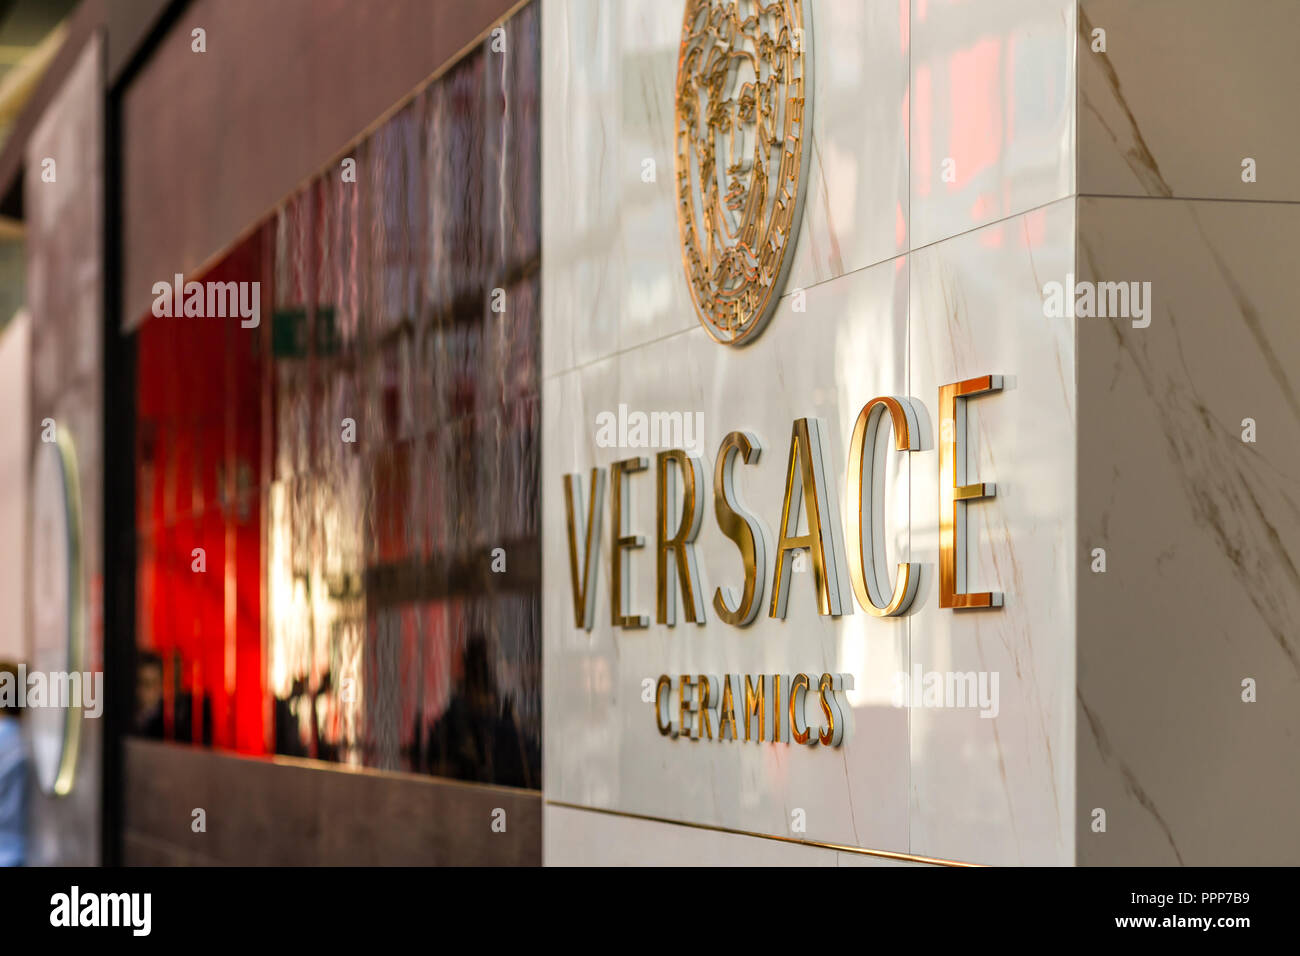 Versace Logo Stock Illustrations – 628 Versace Logo Stock